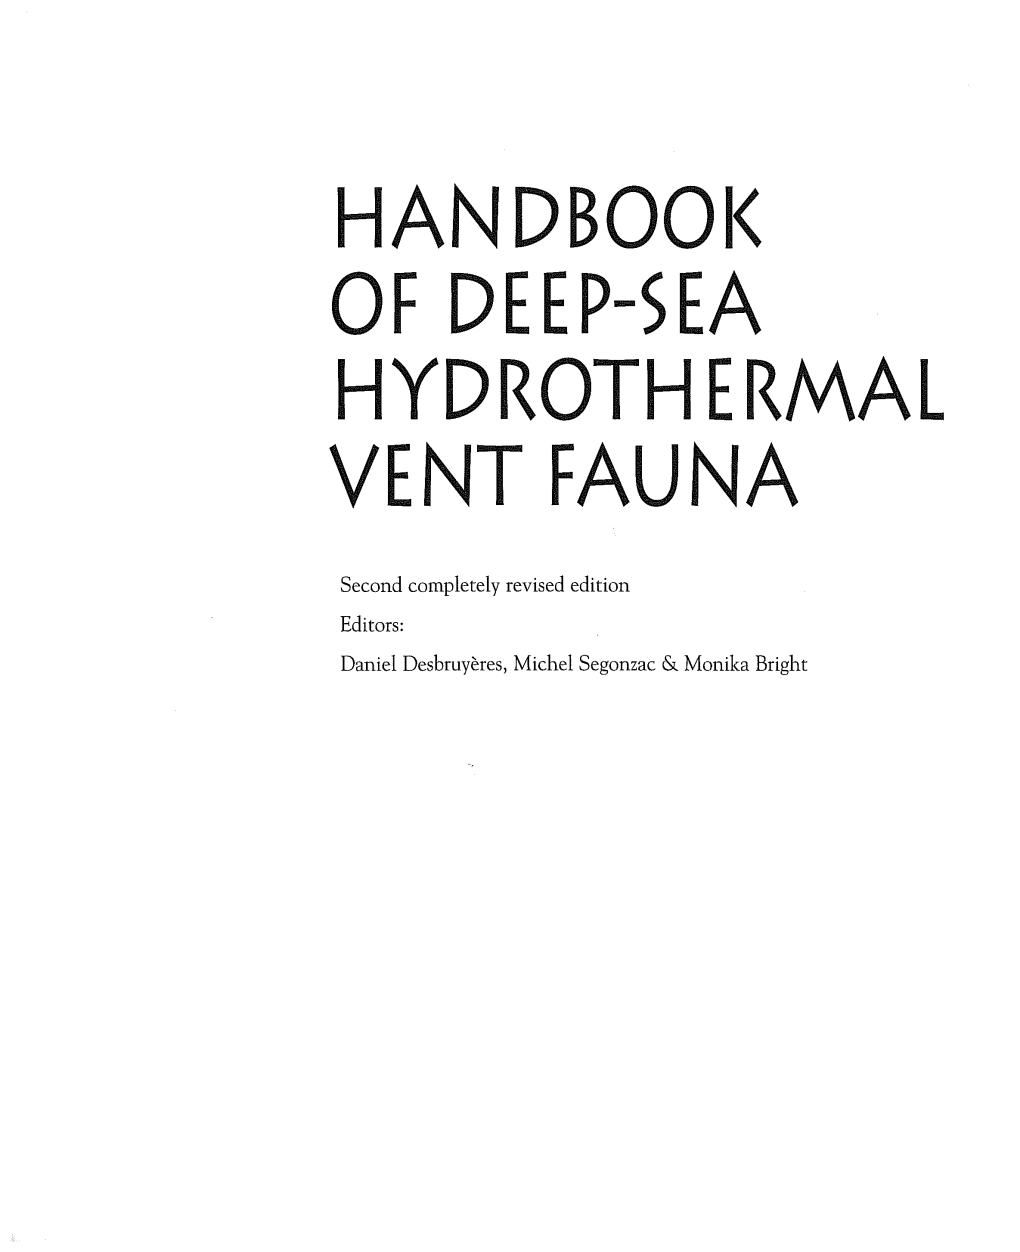 Handbook of Deep-Sea Hydrothermal Vent Fauna